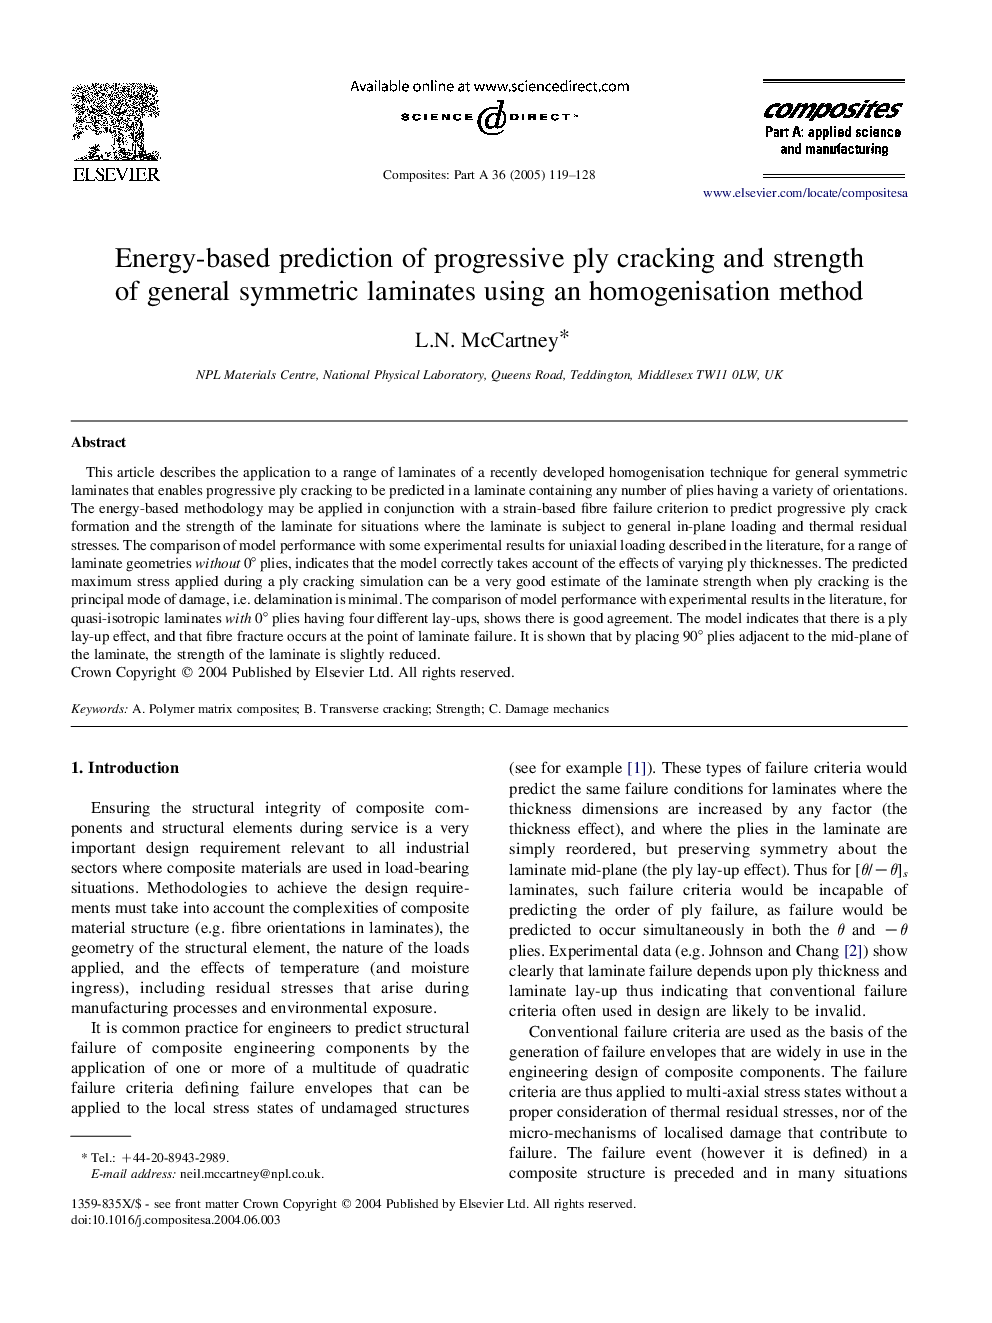 Energy-based prediction of progressive ply cracking and strength of general symmetric laminates using an homogenisation method